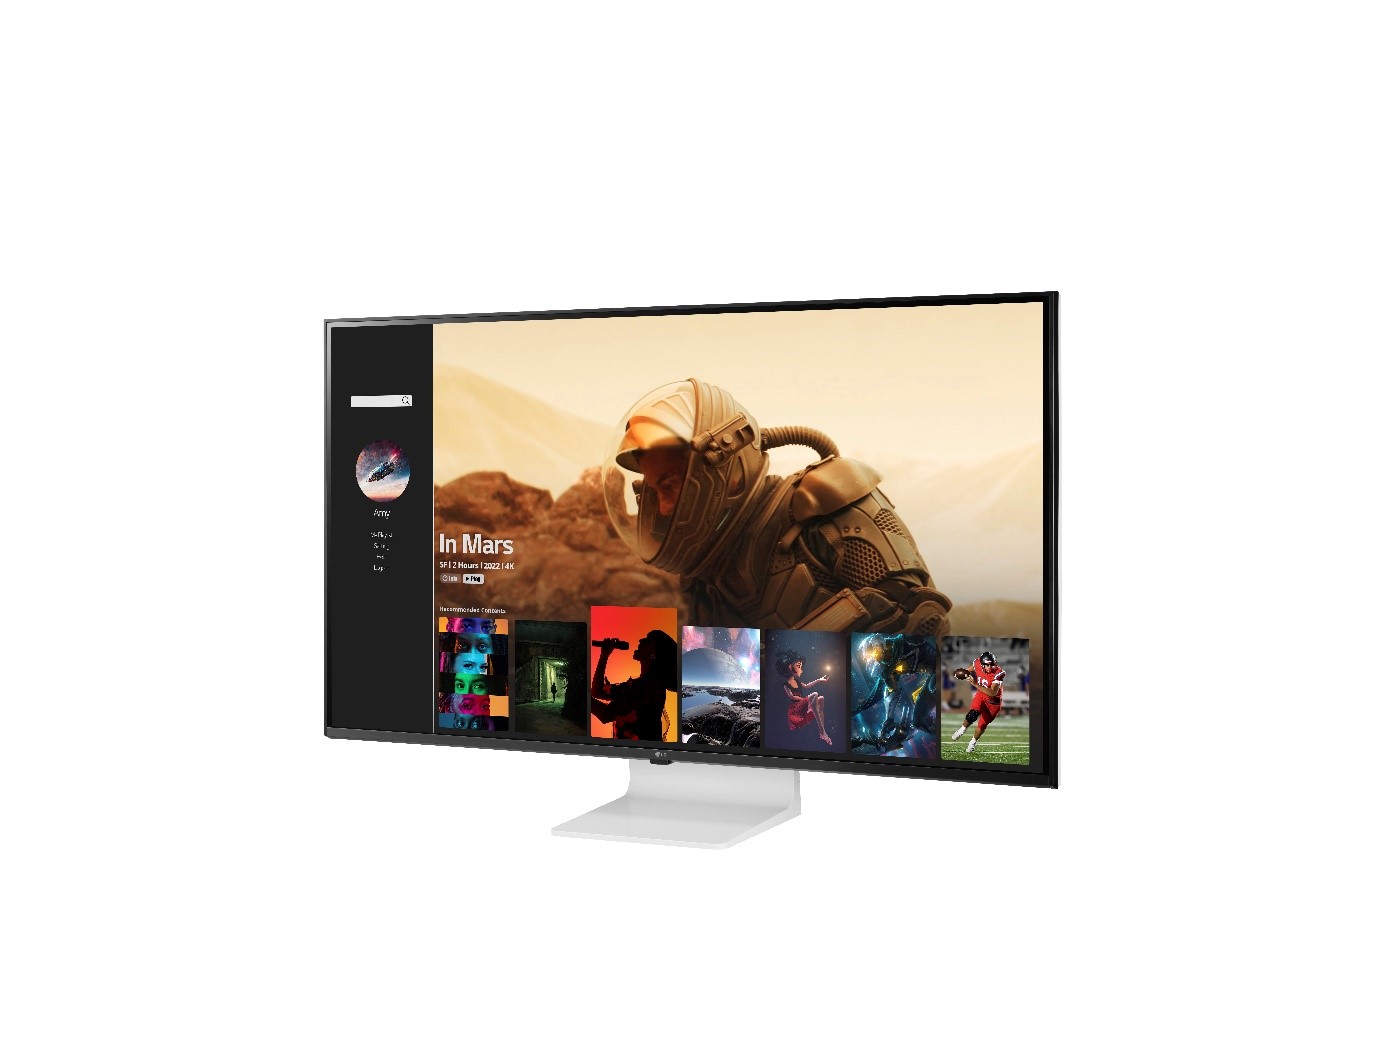 LG 引進全新 43 吋 4K UHD IPS 顯示器，既是工作螢幕也是智慧電視，會員價 15,270 元